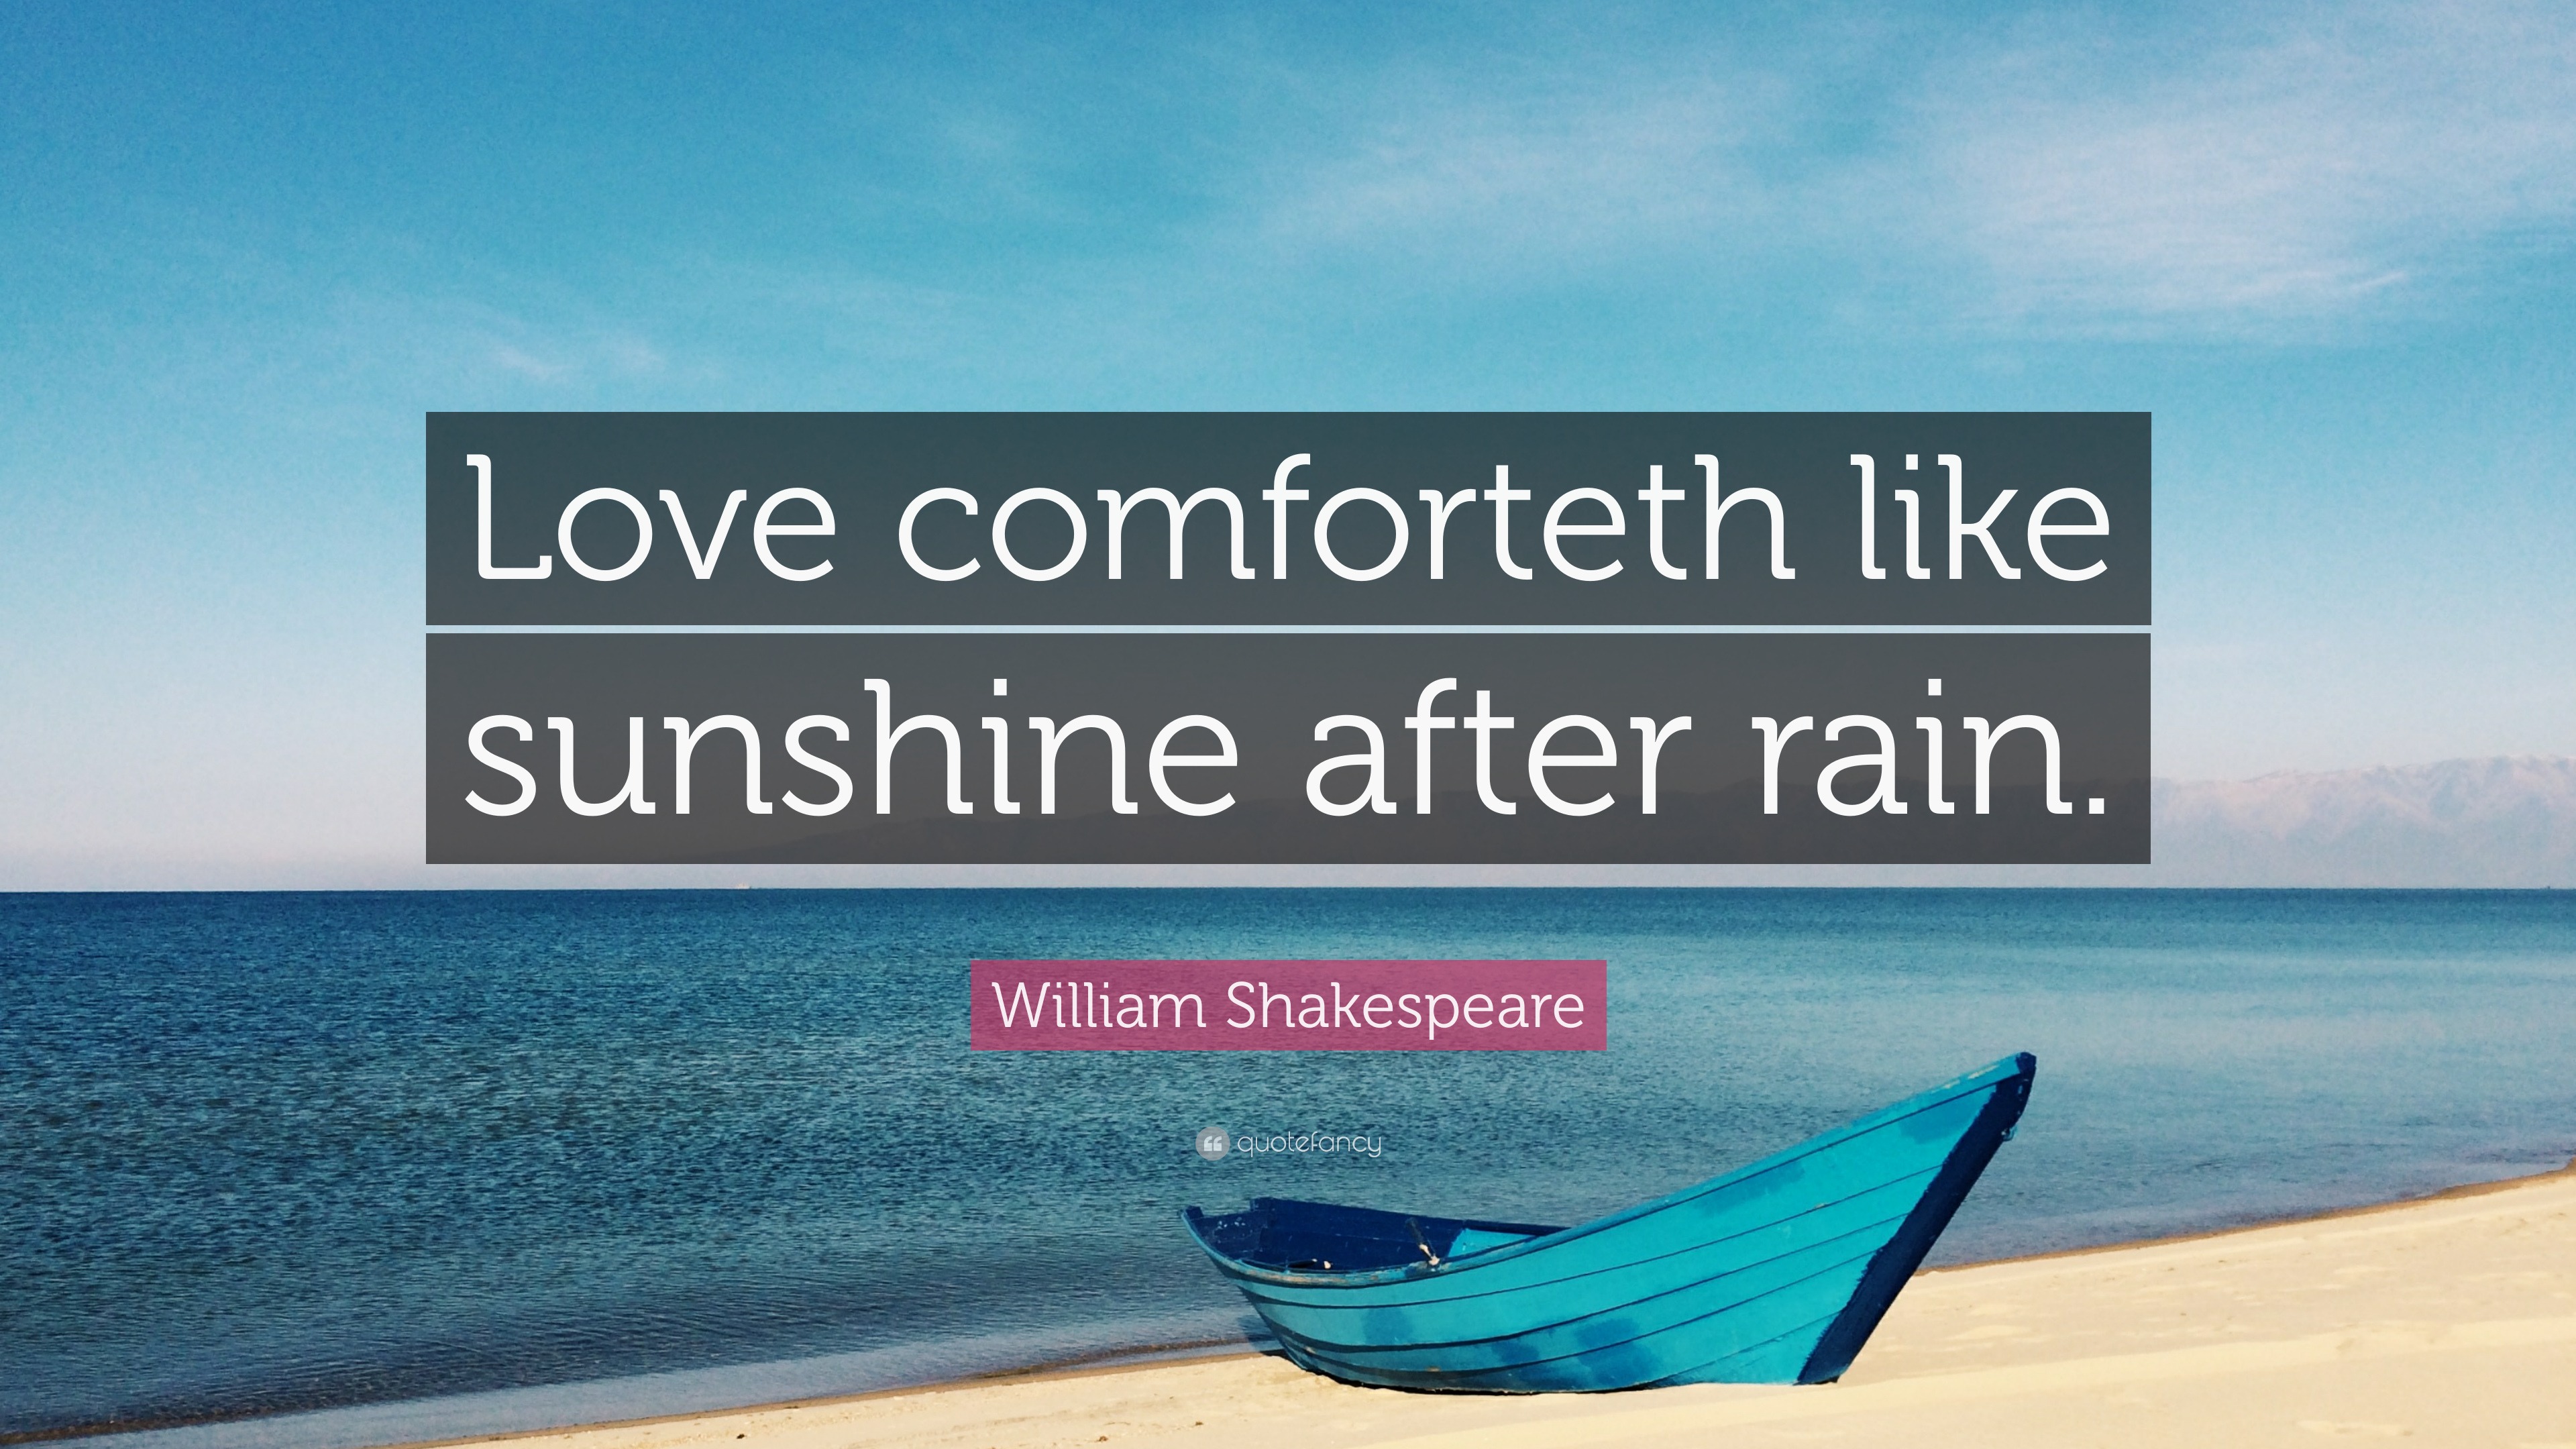 William Shakespeare Quote “Love forteth like sunshine after rain ”